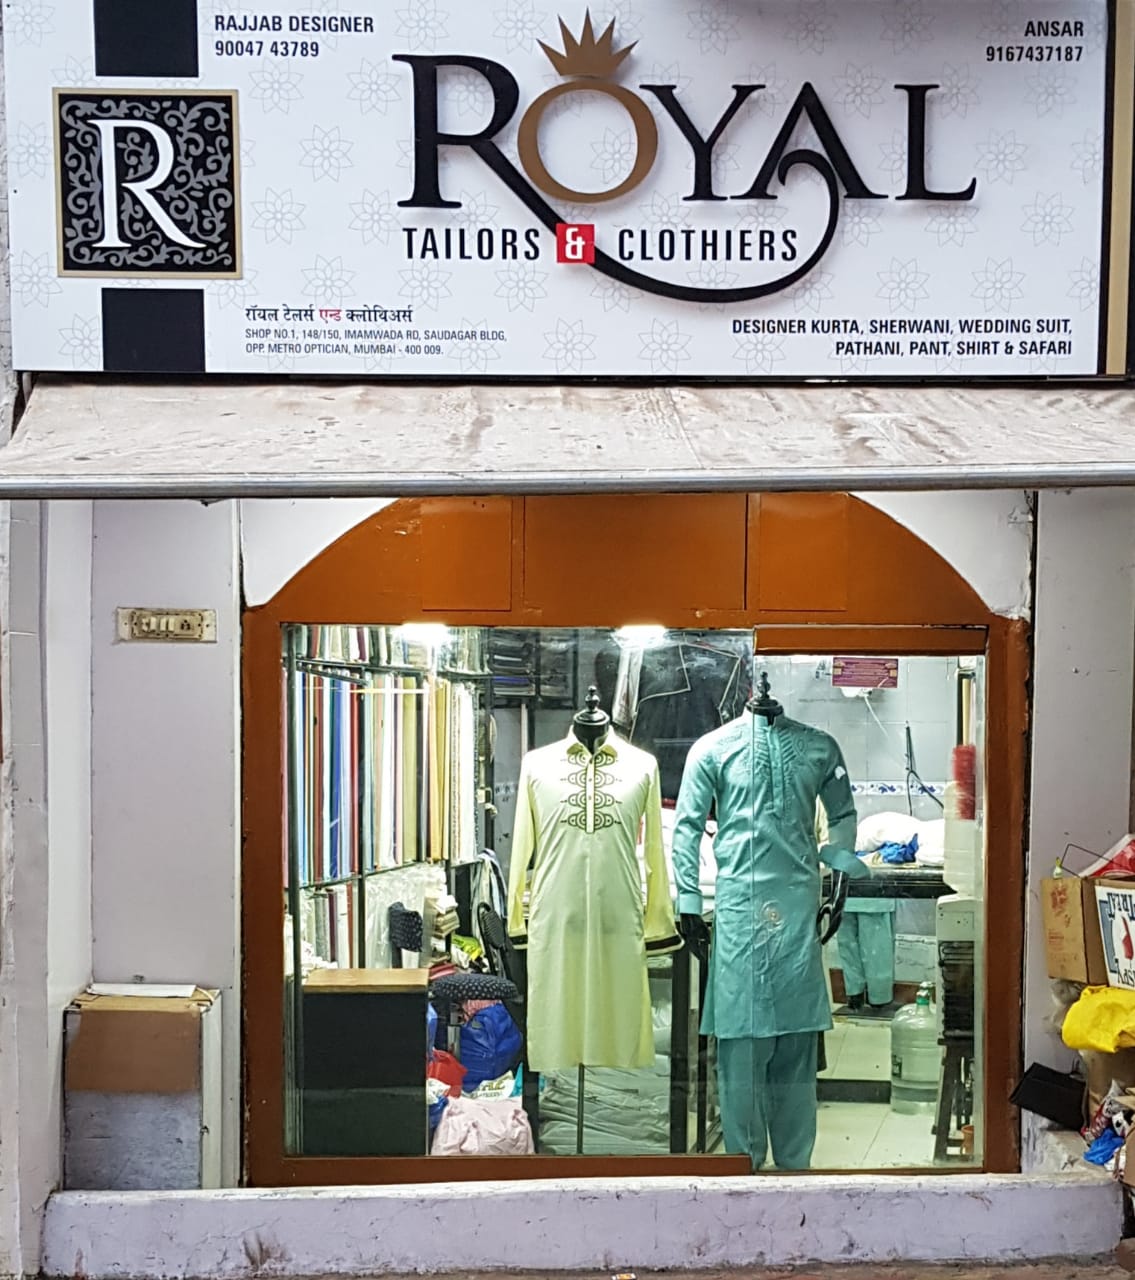 Royal Tailors & Clothiers